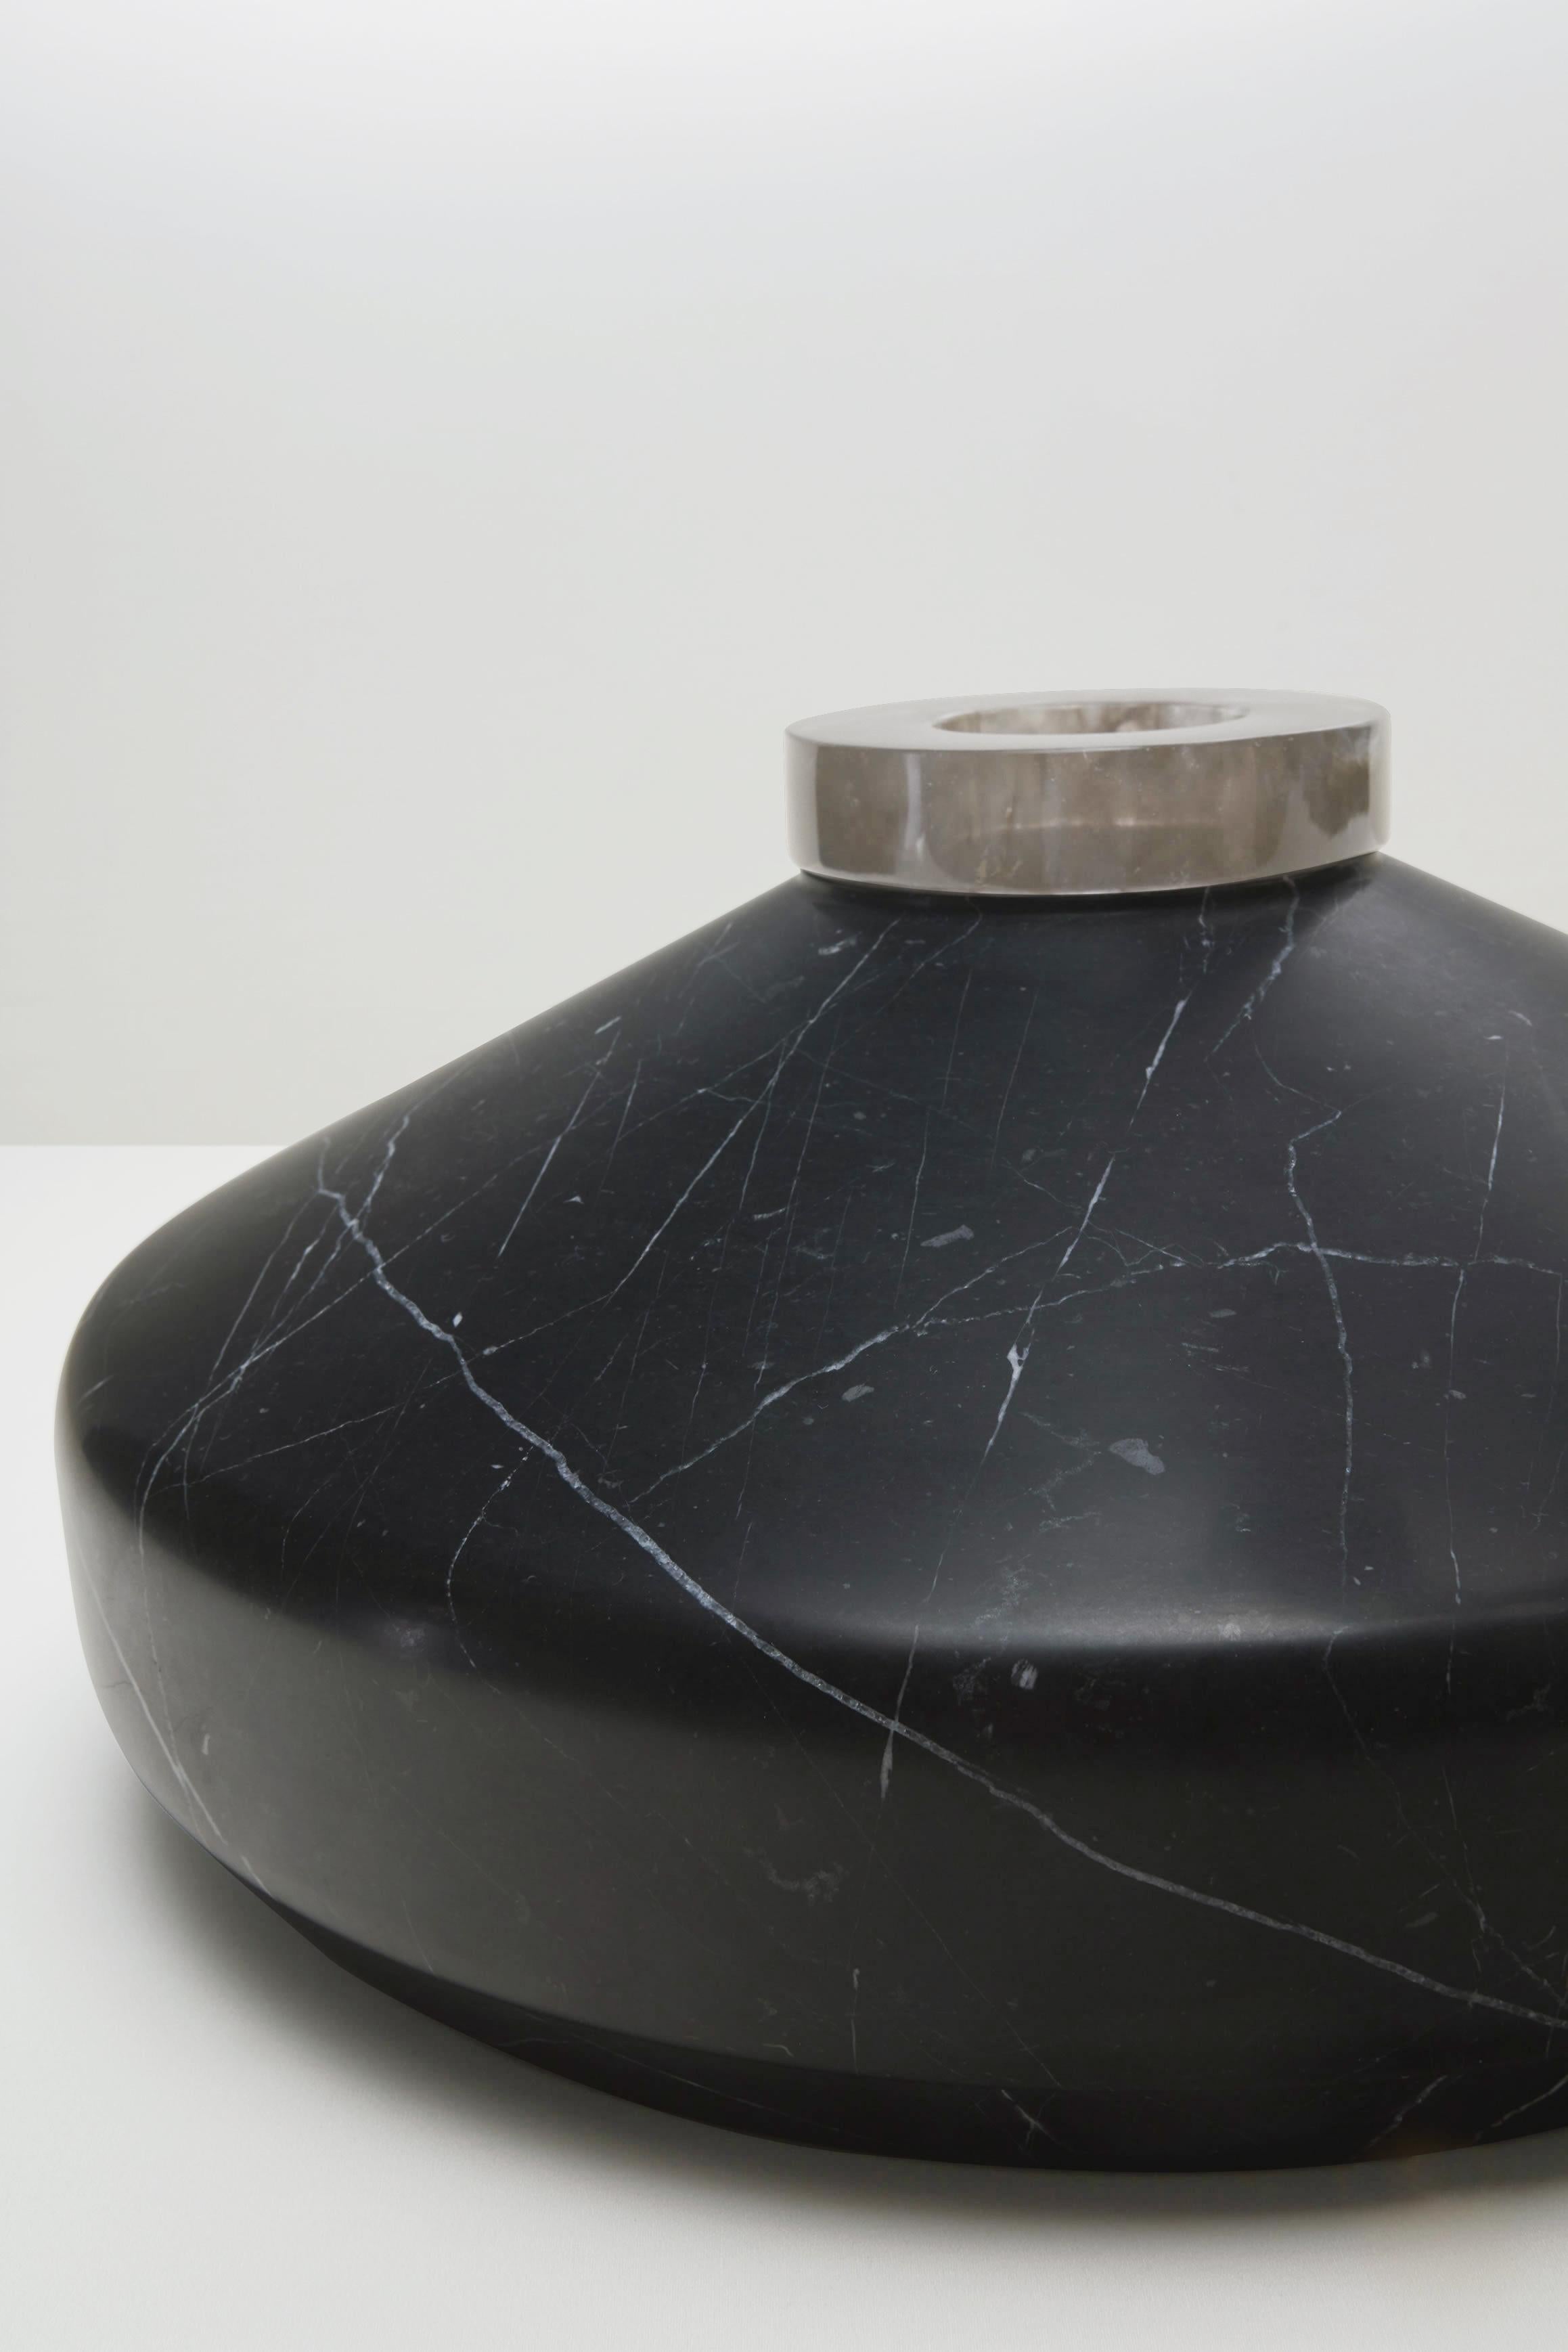 Modern Black Marble Bottle Form Vase with Mocha Rock Crystal Accent by Gilles Caffier For Sale